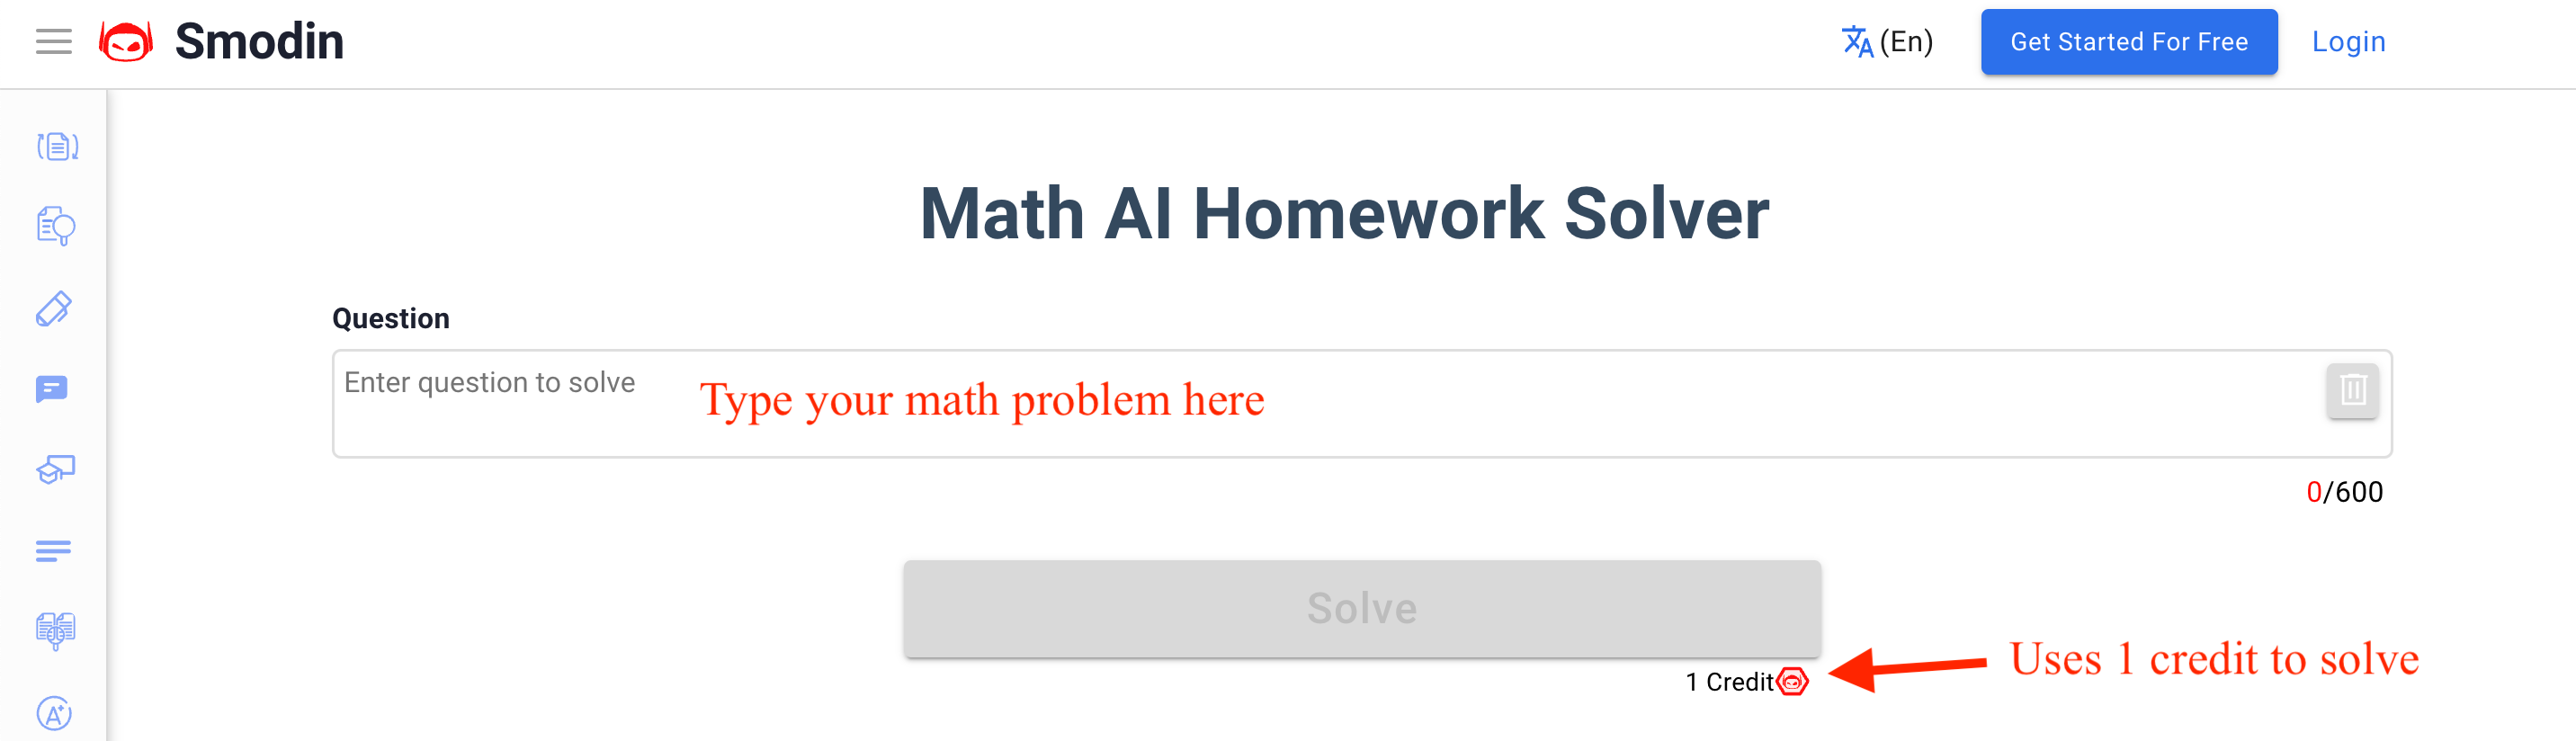 smodin math ai homework solver